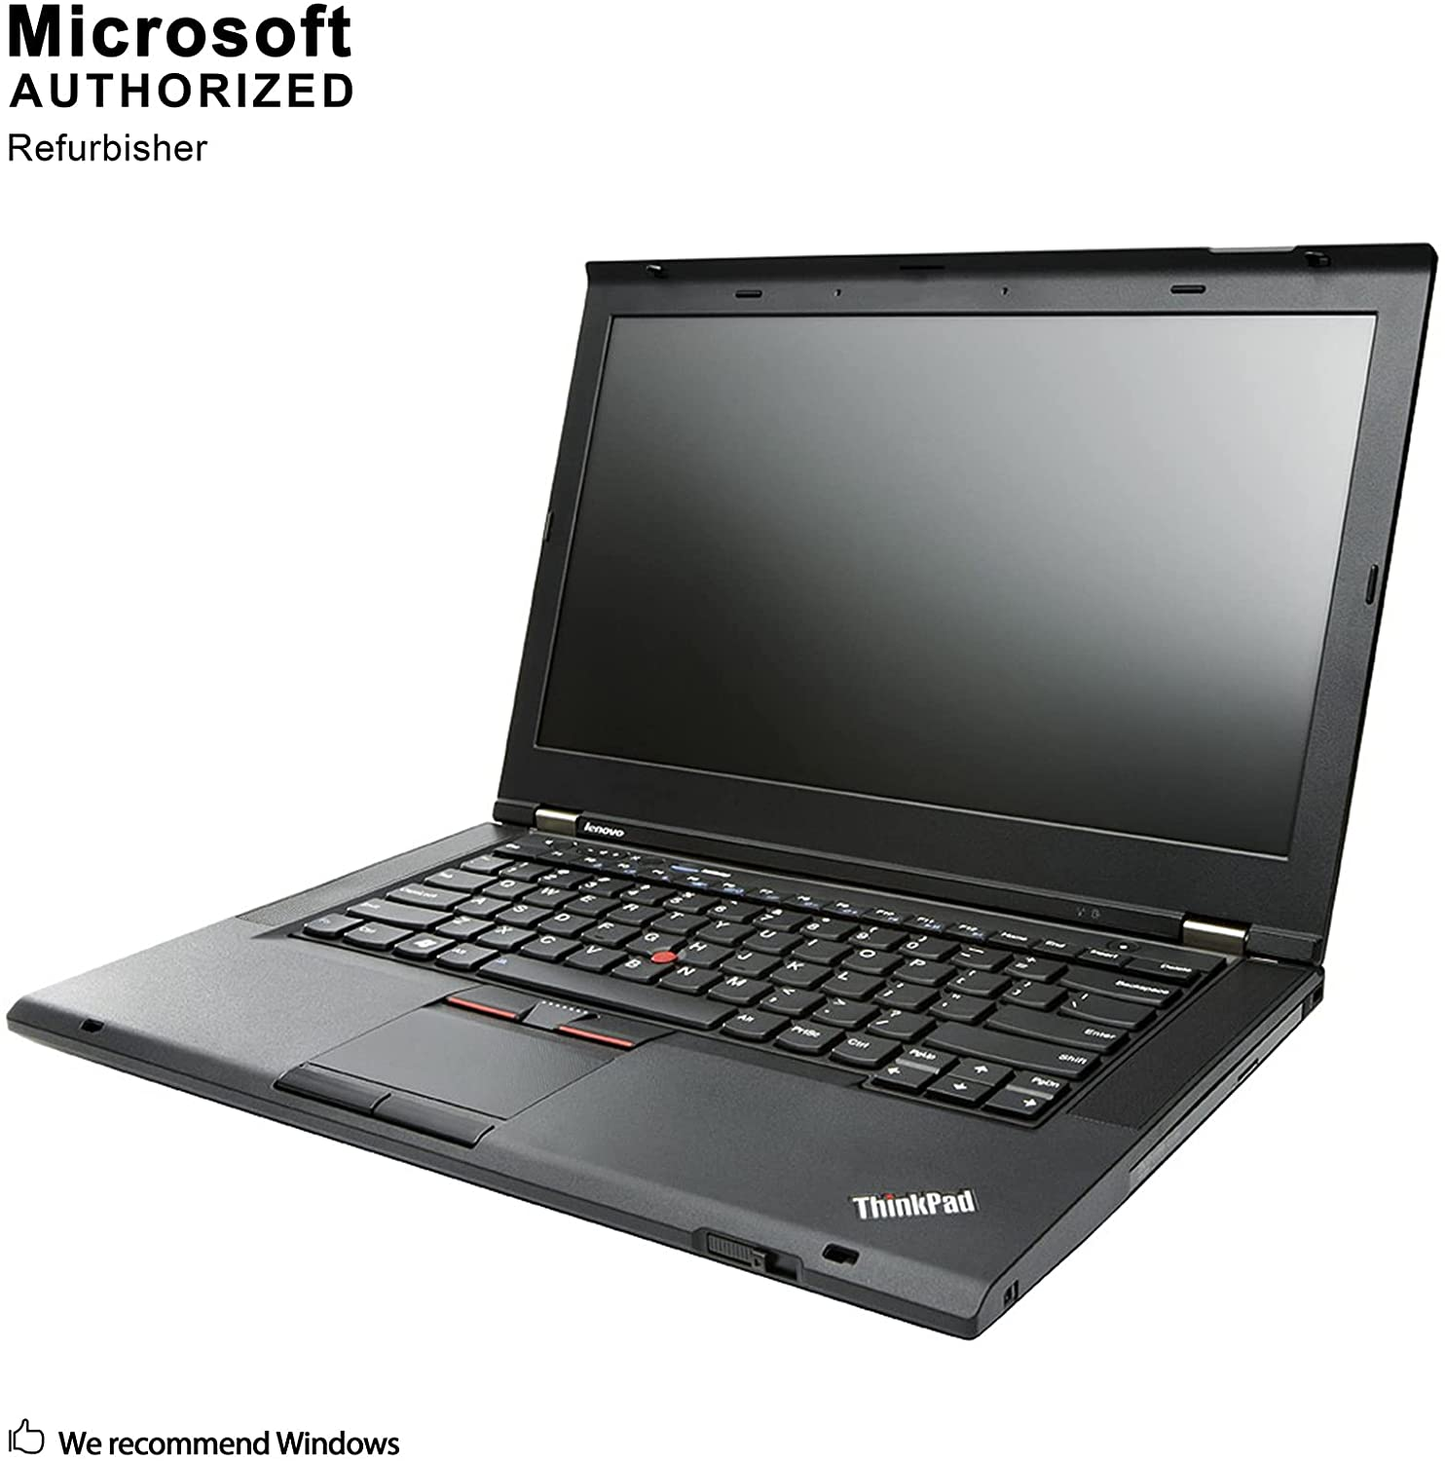 Lenovo Thinkpad T430 Business Laptop Computer Intel I5-3320M up Tp 3.3Ghz, 8GB DDR3, 128GB SSD, 14In HD Led-Backlit Display, DVD, Wifi, USB 3.0, Windows 10 Pro (Renewed)